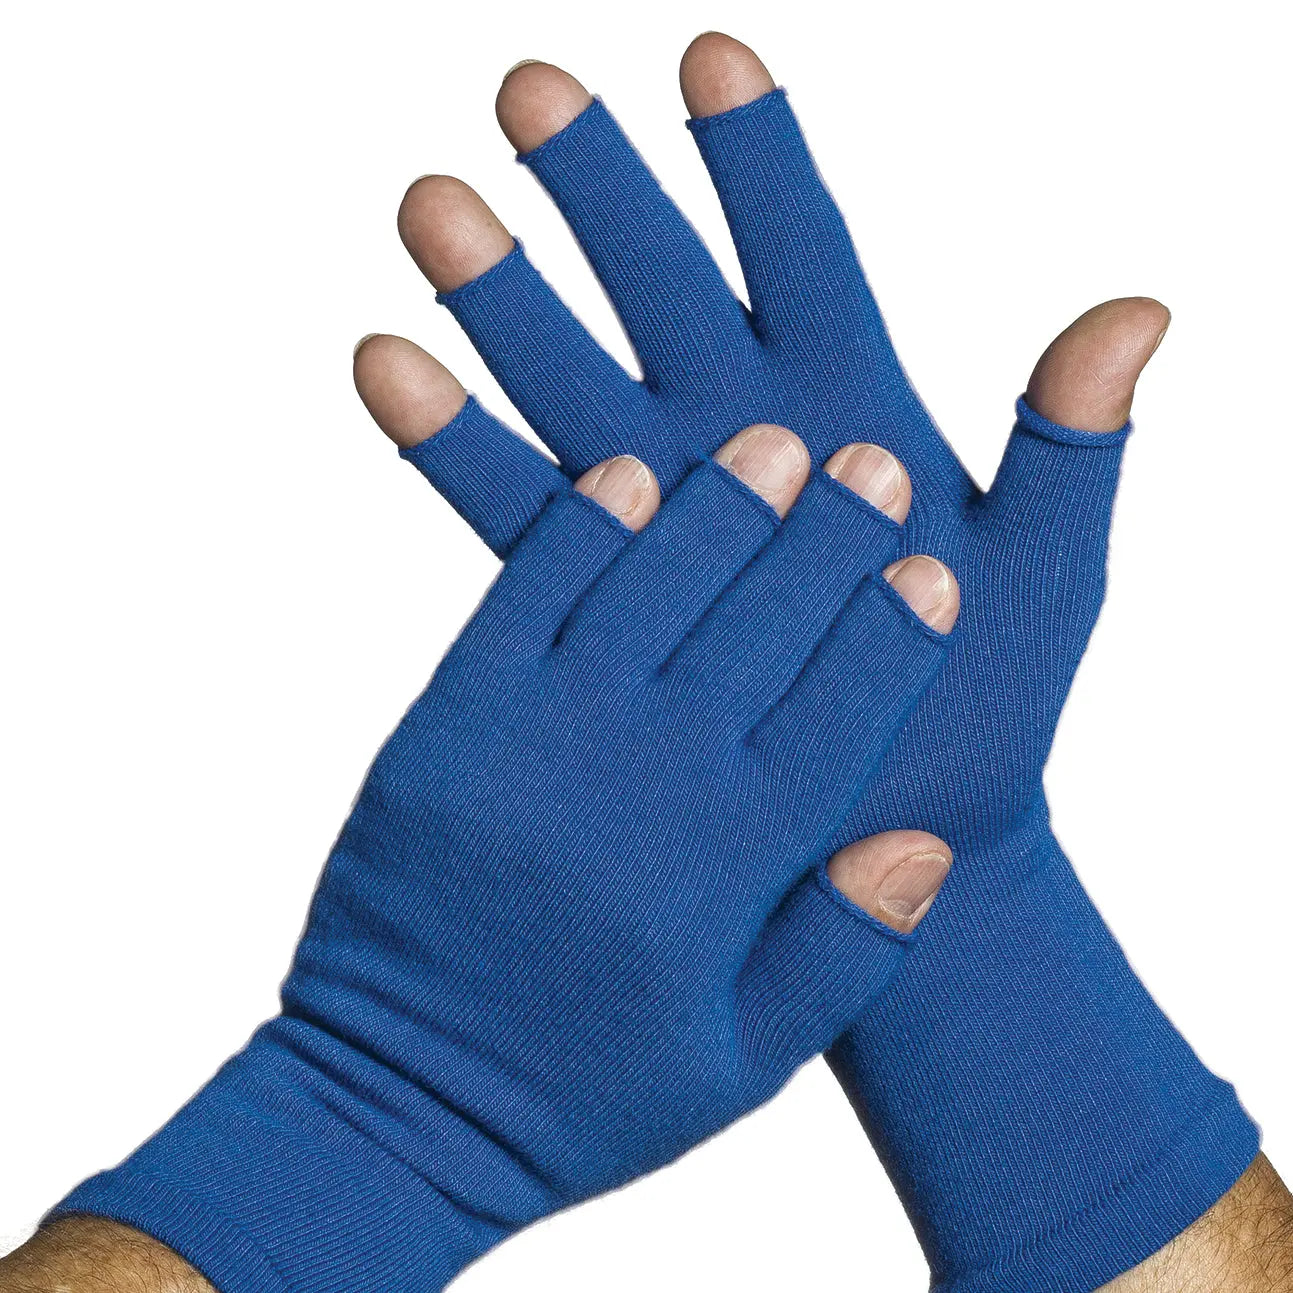 3/4 Finger Gloves - Keep hands warm (pair) Limbkeepers